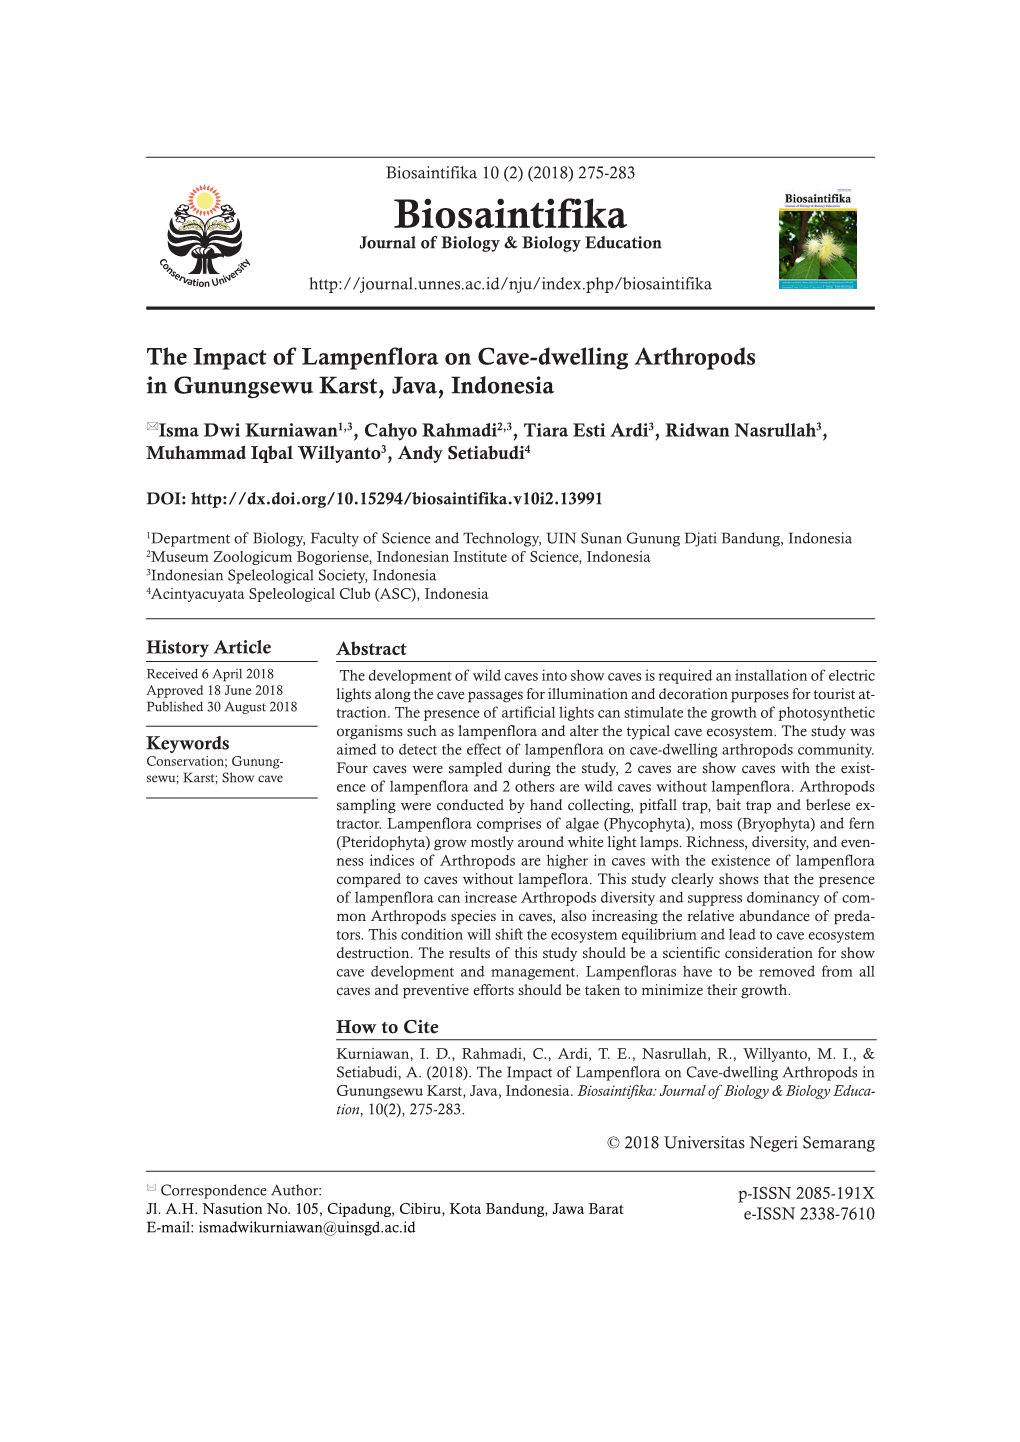 The Impact of Lampenflora on Cave-Dwelling Arthropods in Gunungsewu Karst, Java, Indonesia